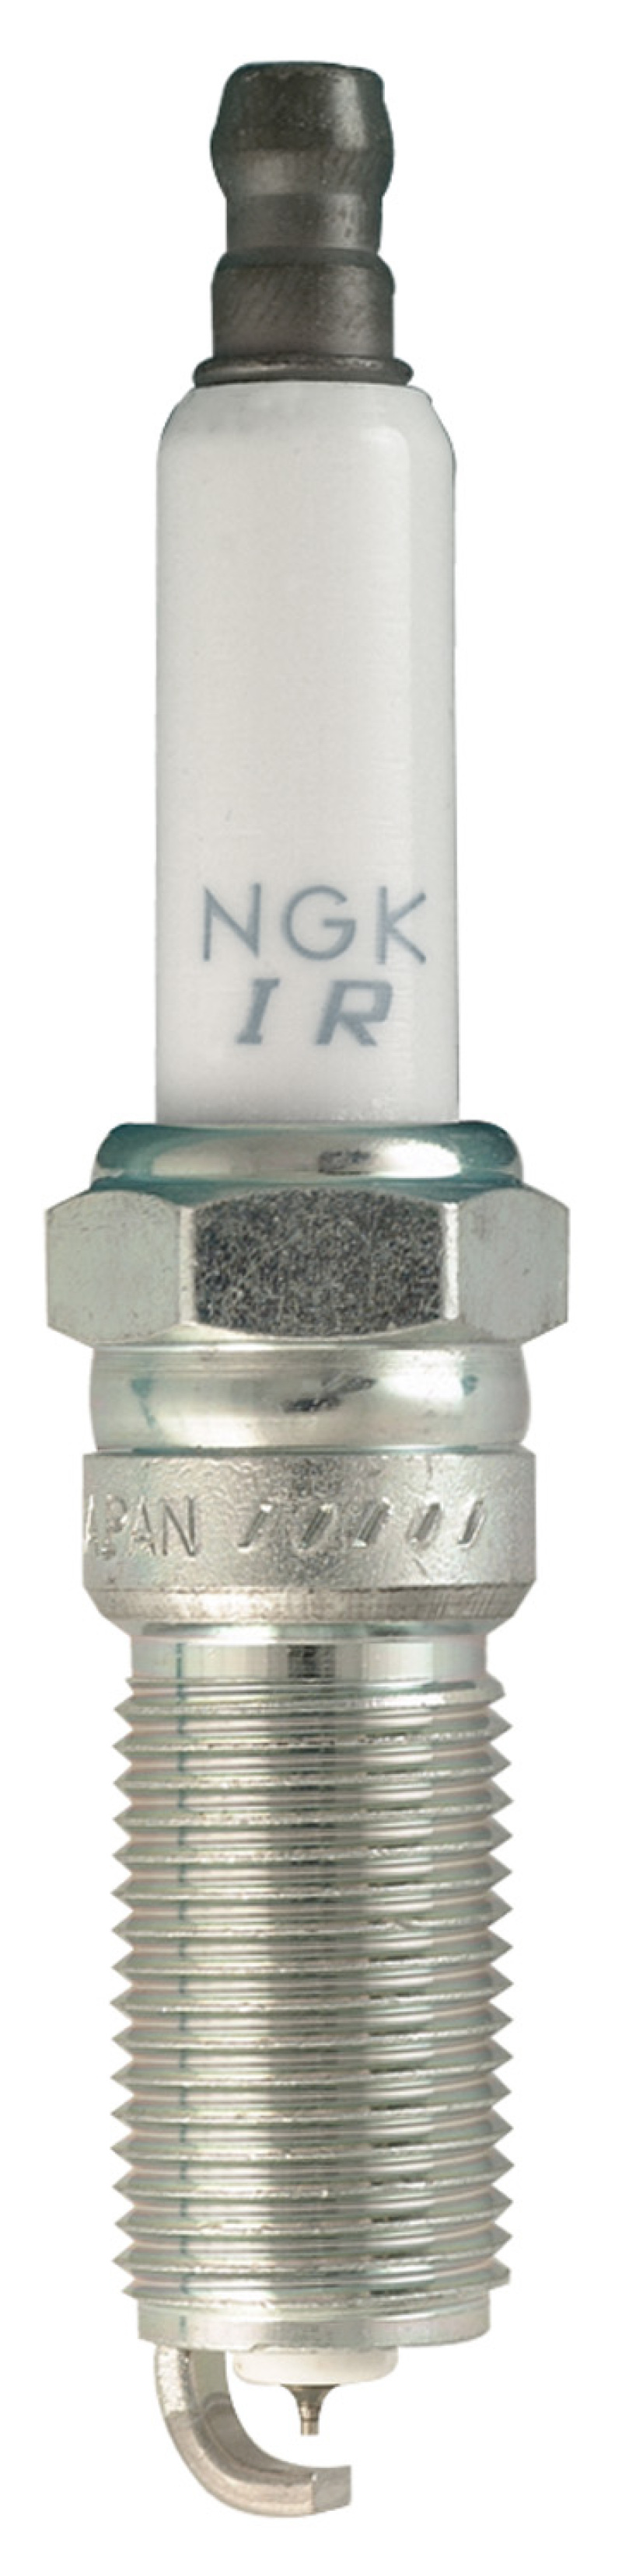 NGK Laser Iridium/Platinum Spark Plug Box of 4 (ILTR6E11) - 90117